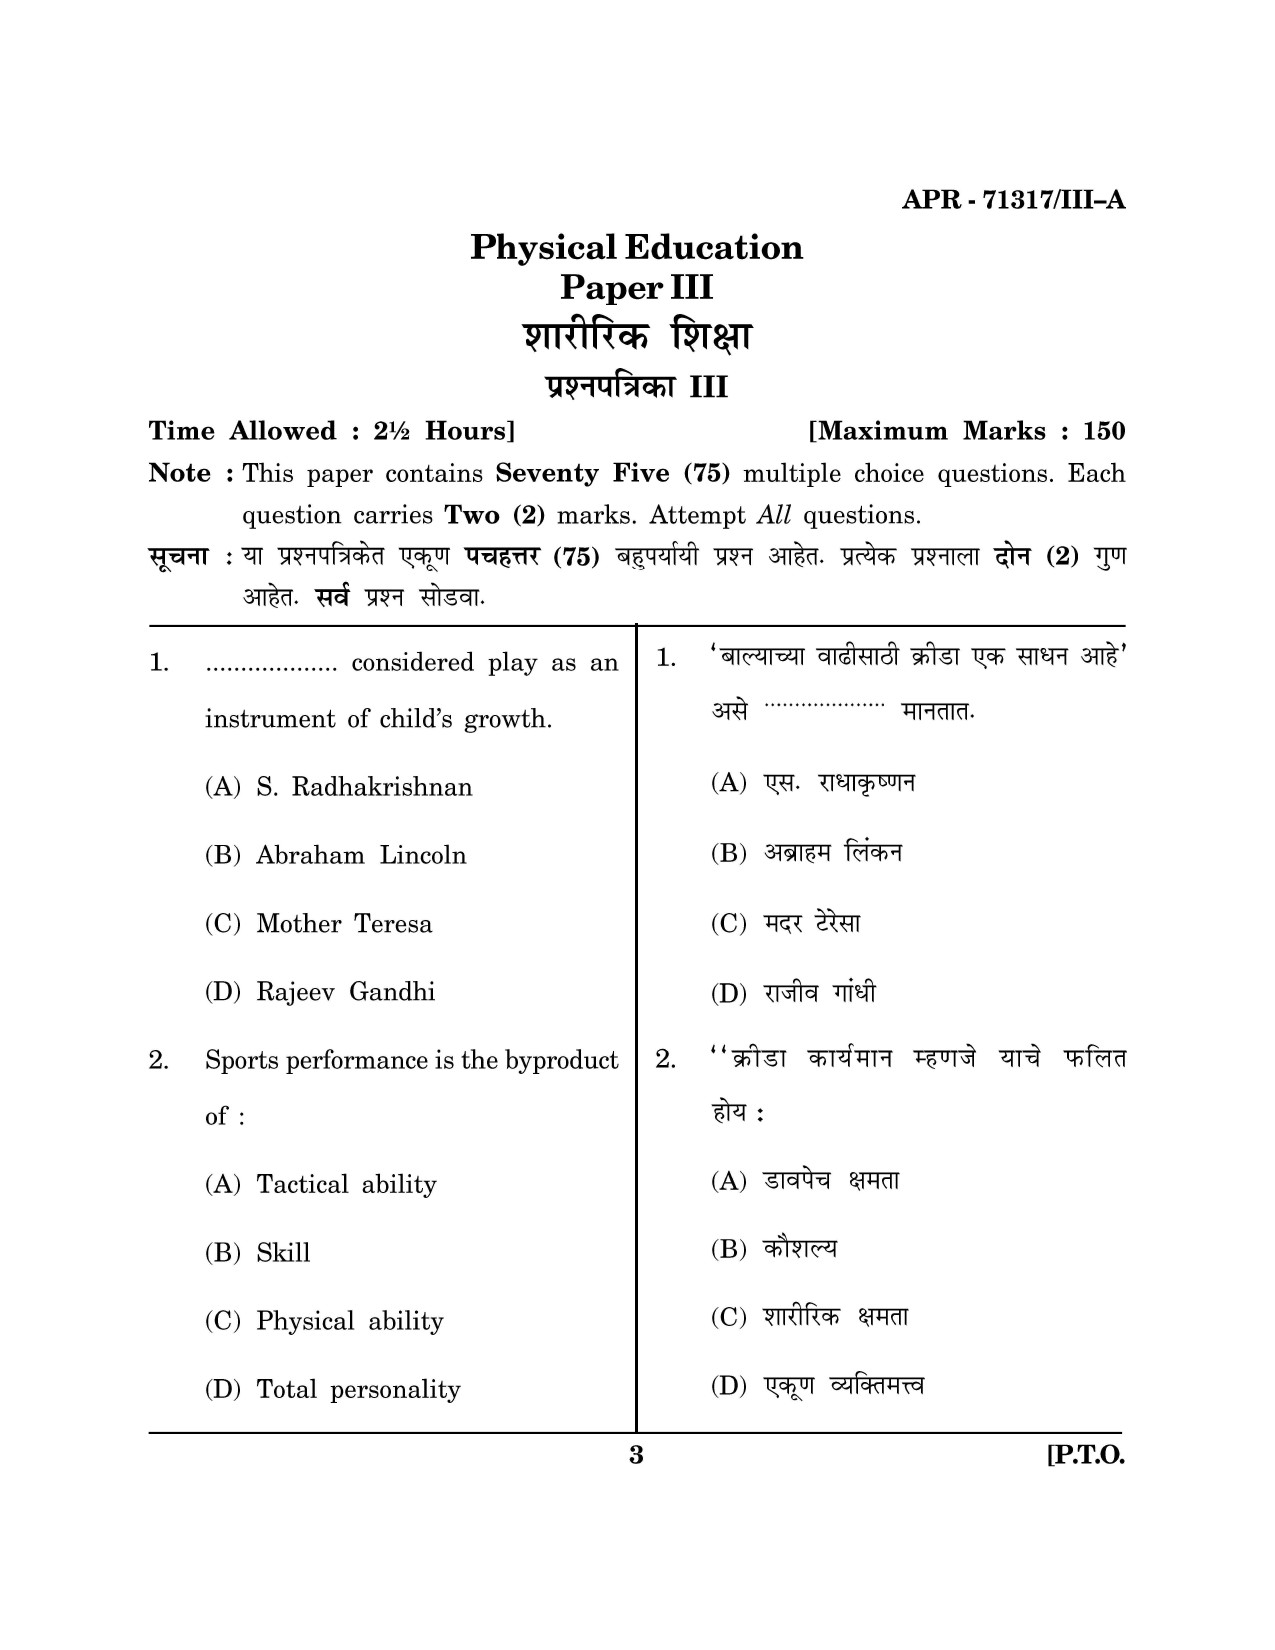 Maharashtra SET Physical Education Question Paper III April 2017 2